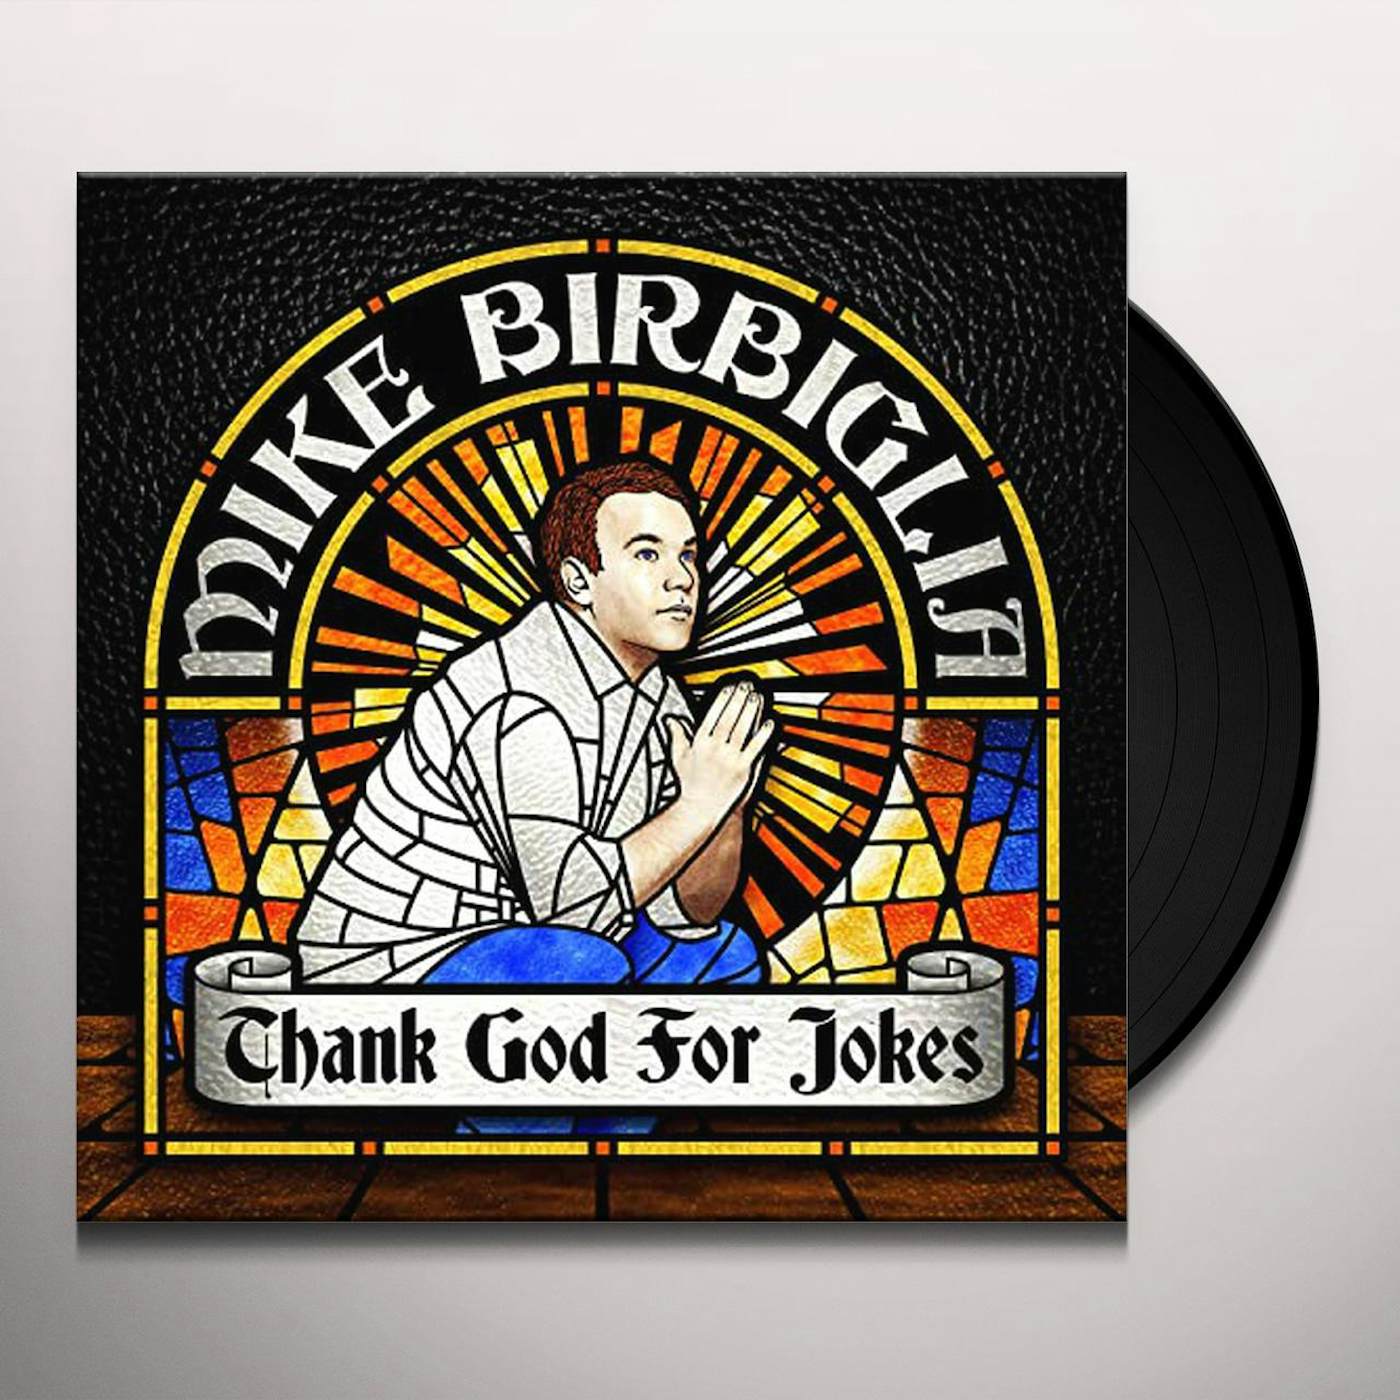 Mike Birbiglia THANK GOD FOR JOKES Vinyl Record